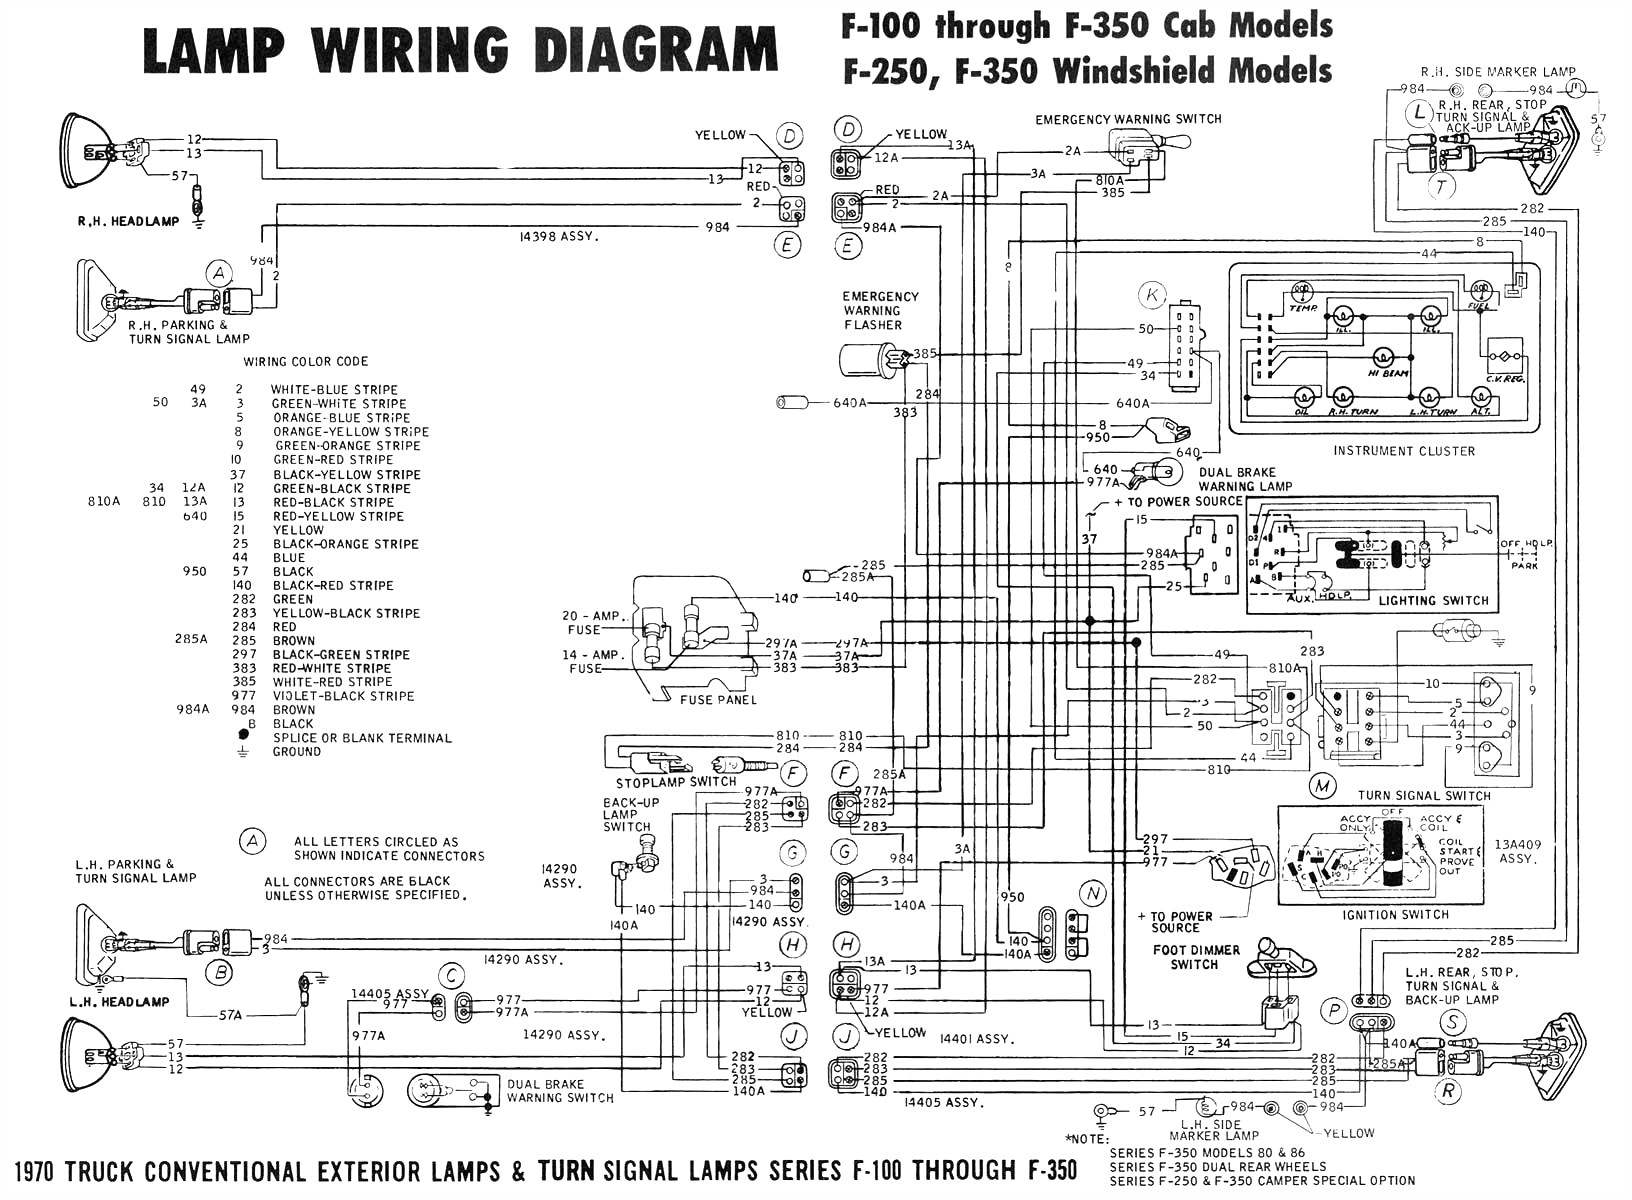 wiring diagram likewise wiring diagram furthermore porsche 914 wiring diagram likewise 1955 chevy rear end diagram moreover 1967 ford